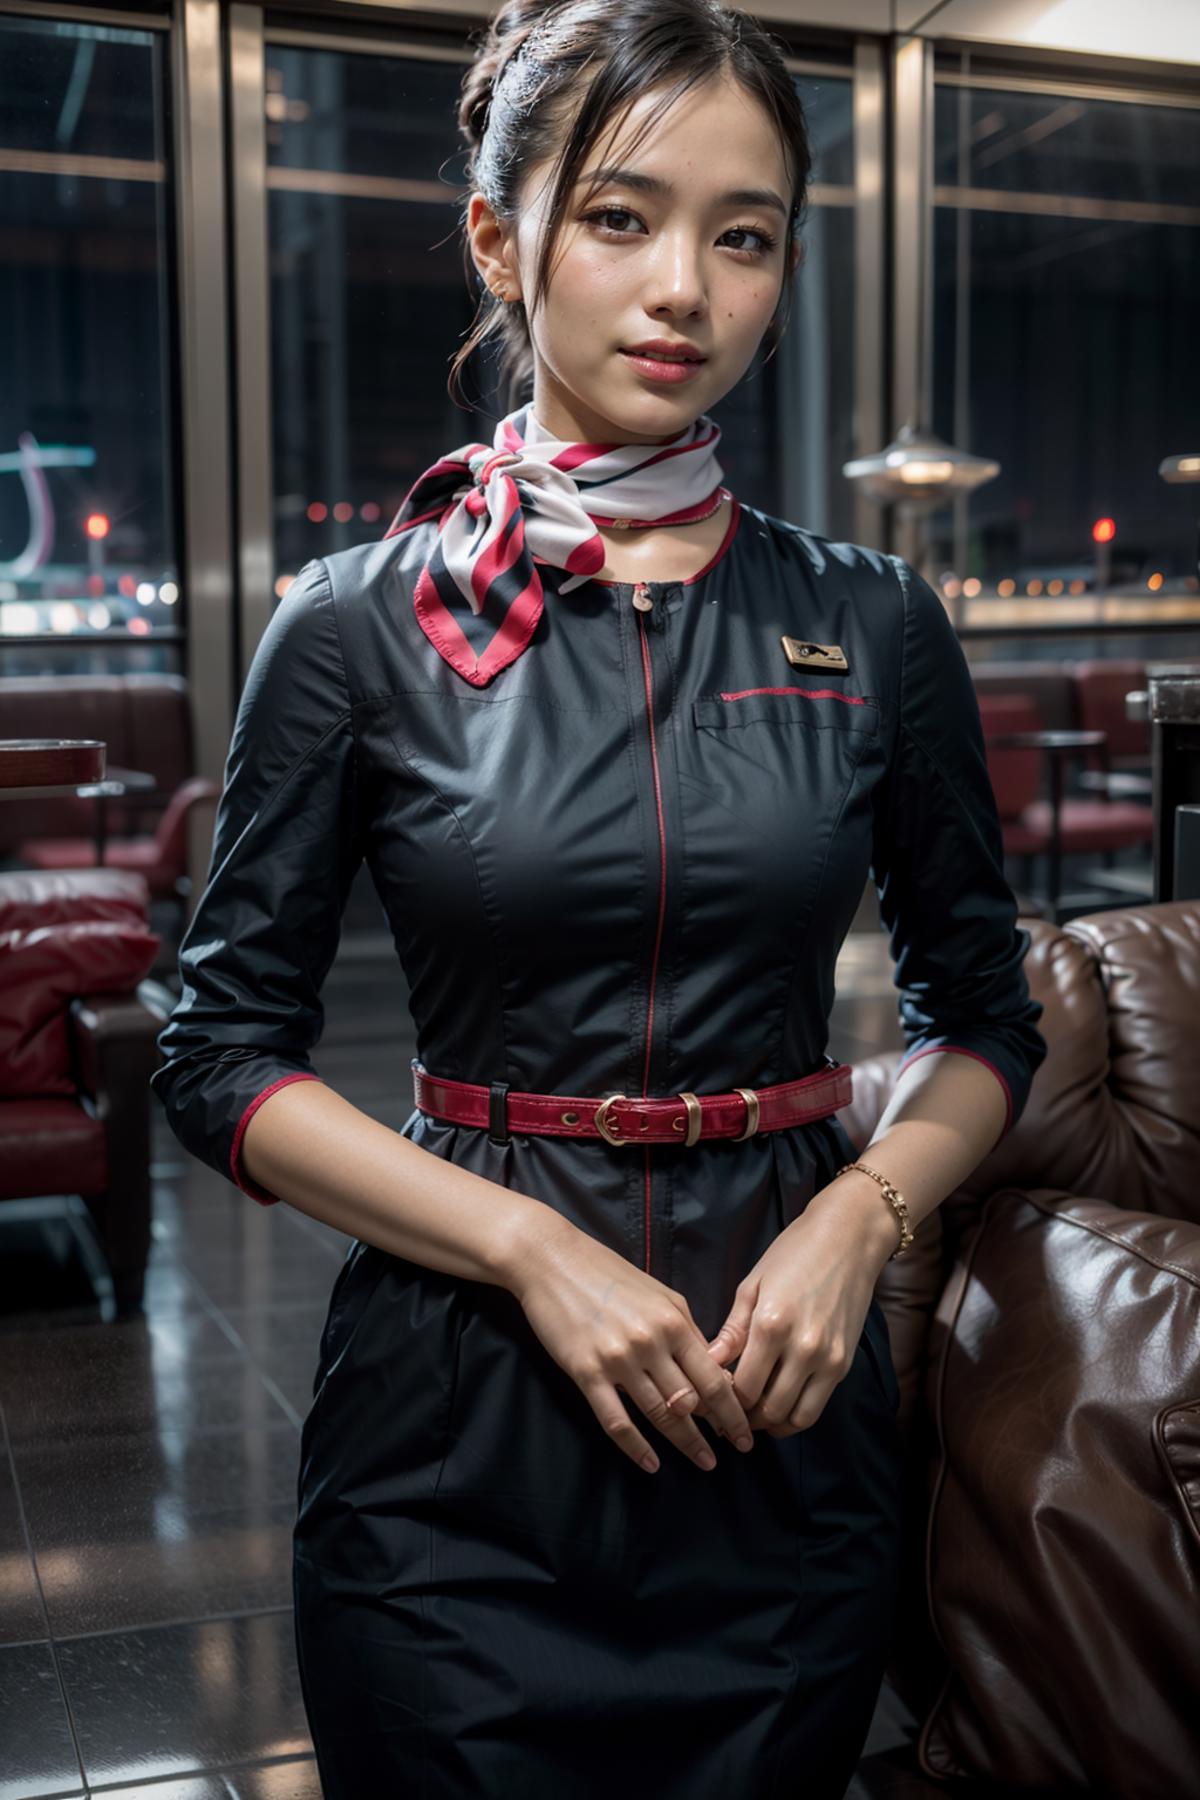 JAL Stewardess Uniform image by feetie